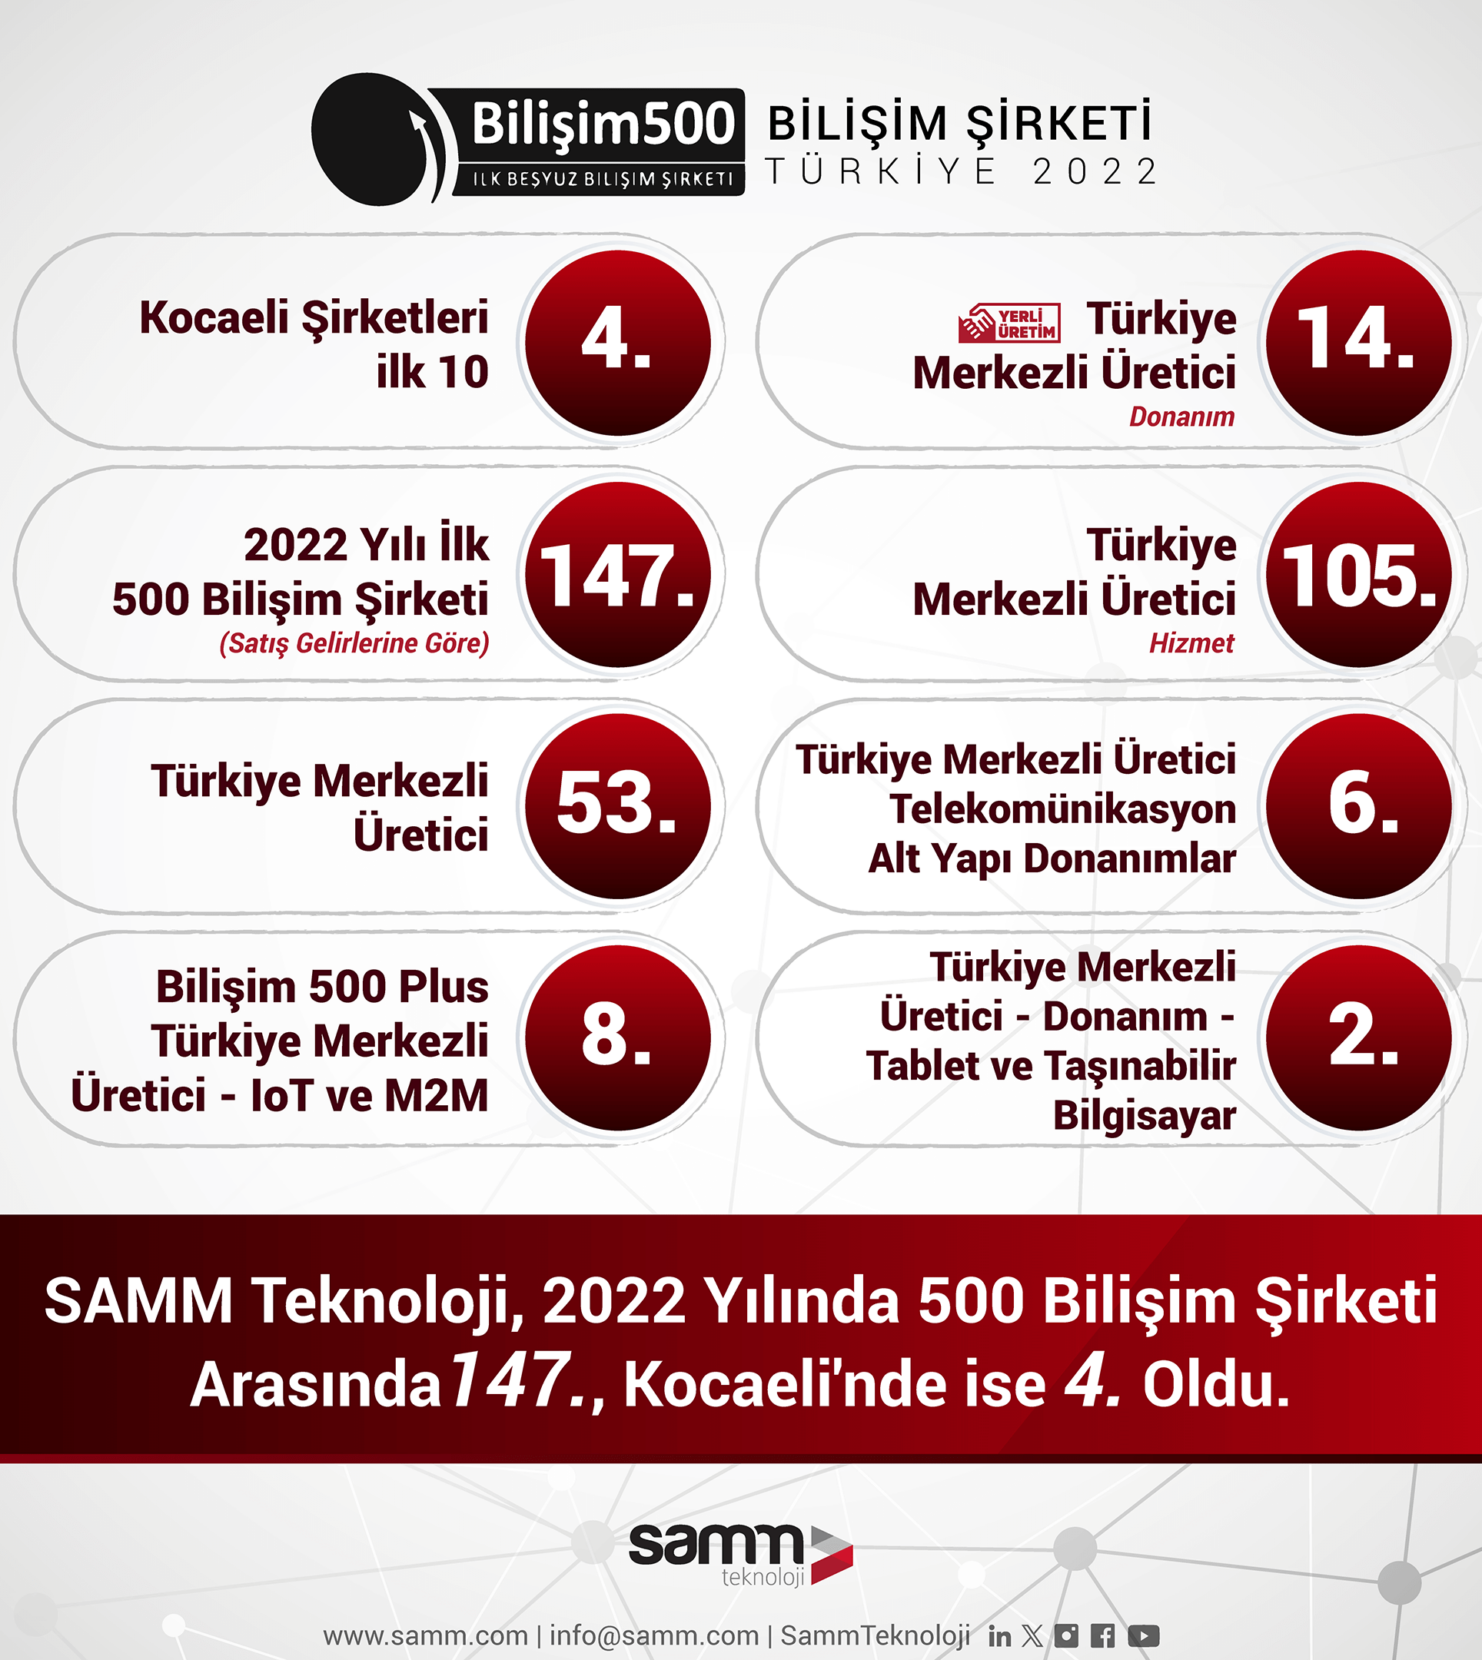 SAMM Teknoloji Ranks 147th in the 'Informatics 500' Ranking and the 4th Largest IT Company in Kocaeli